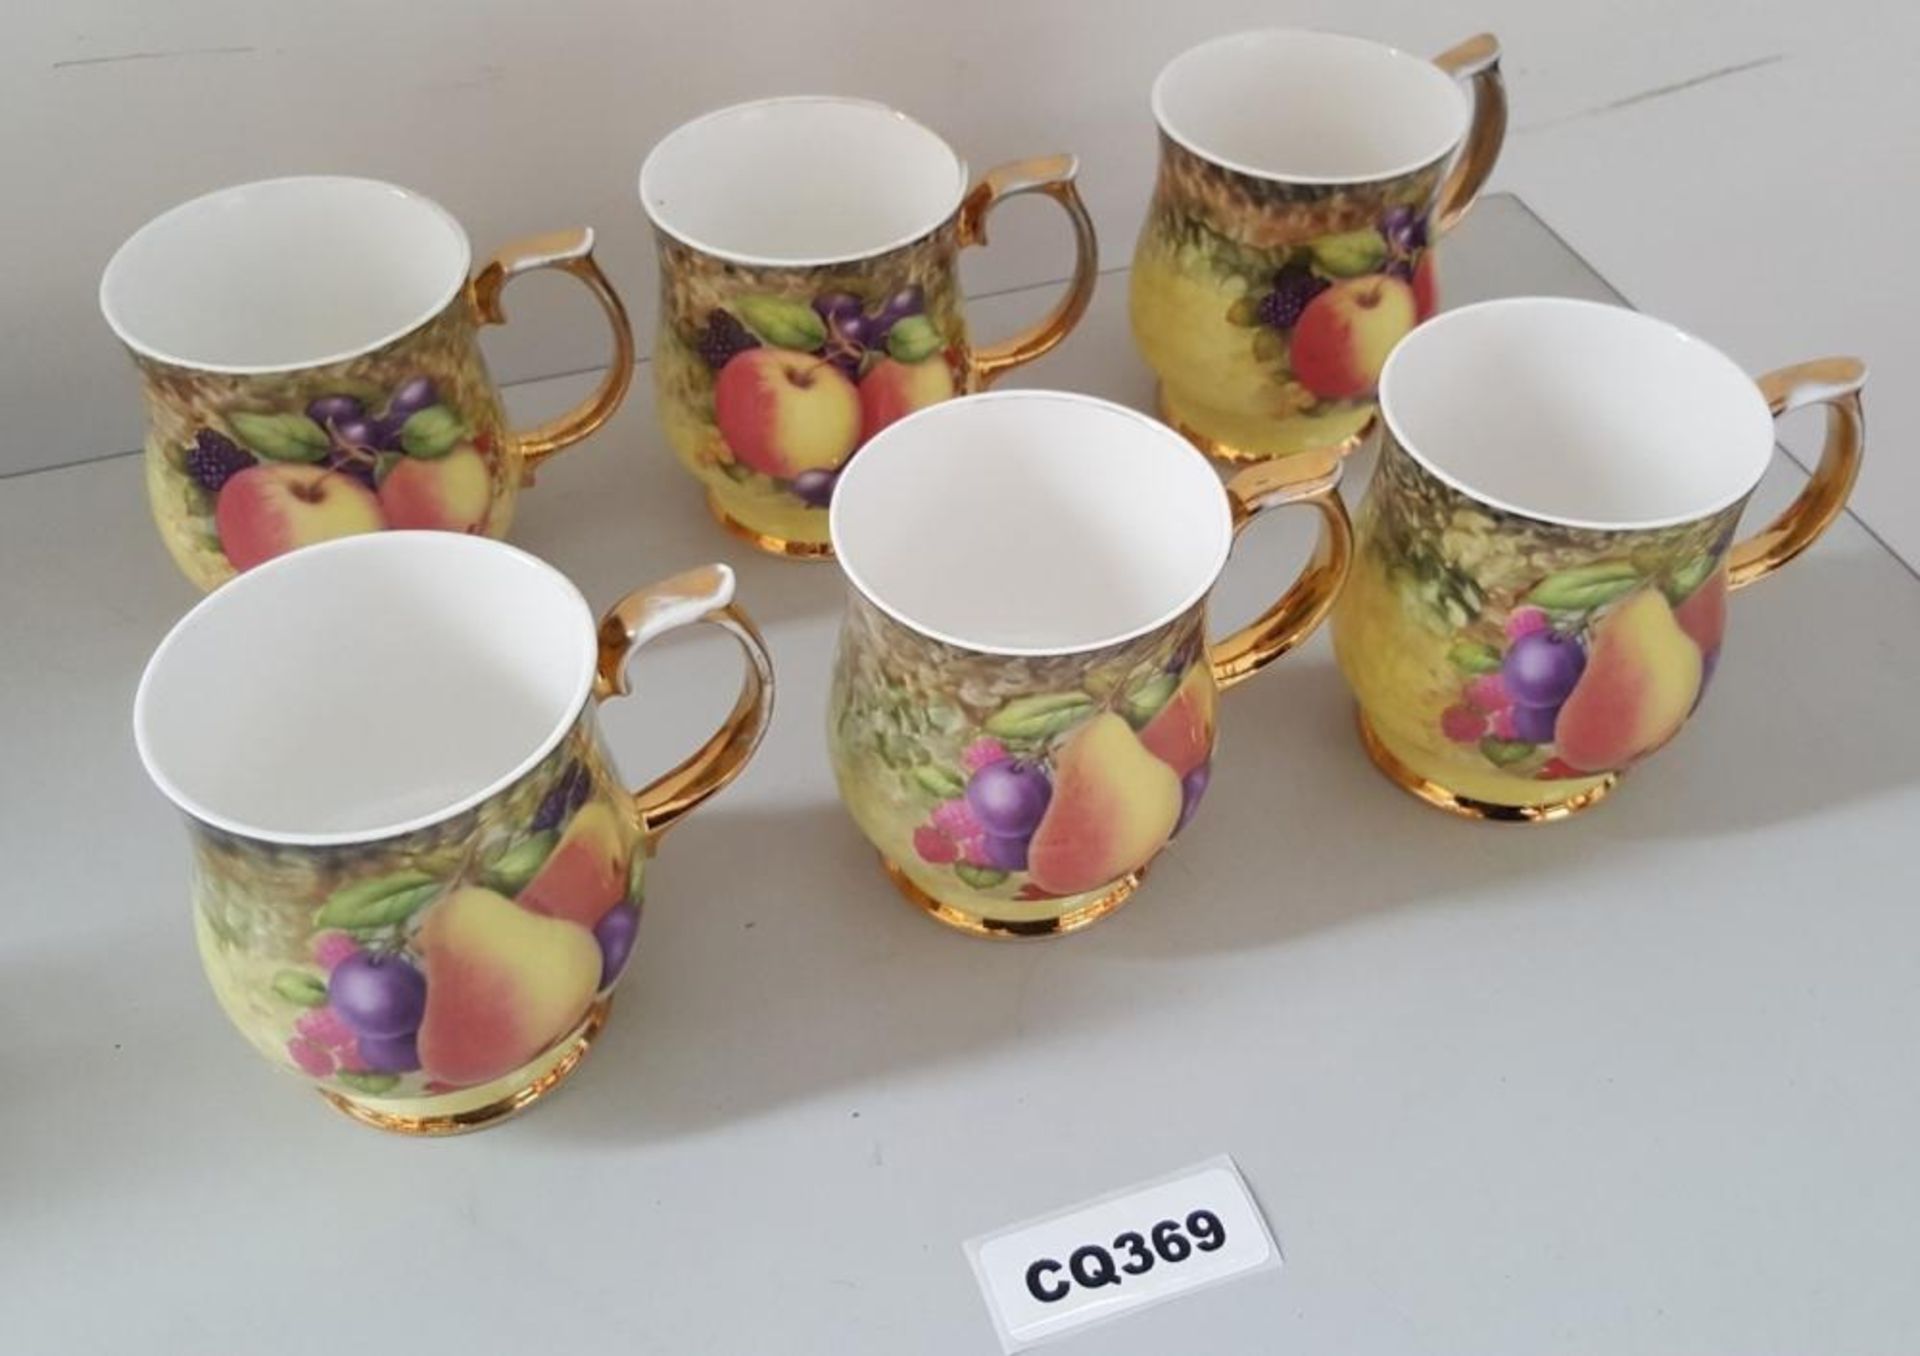 6 x Set Of Baron China Staffs LTD Mugs With Fruit Design - Ref CQ369 E - CL334 - Location: Altrincha - Image 4 of 5